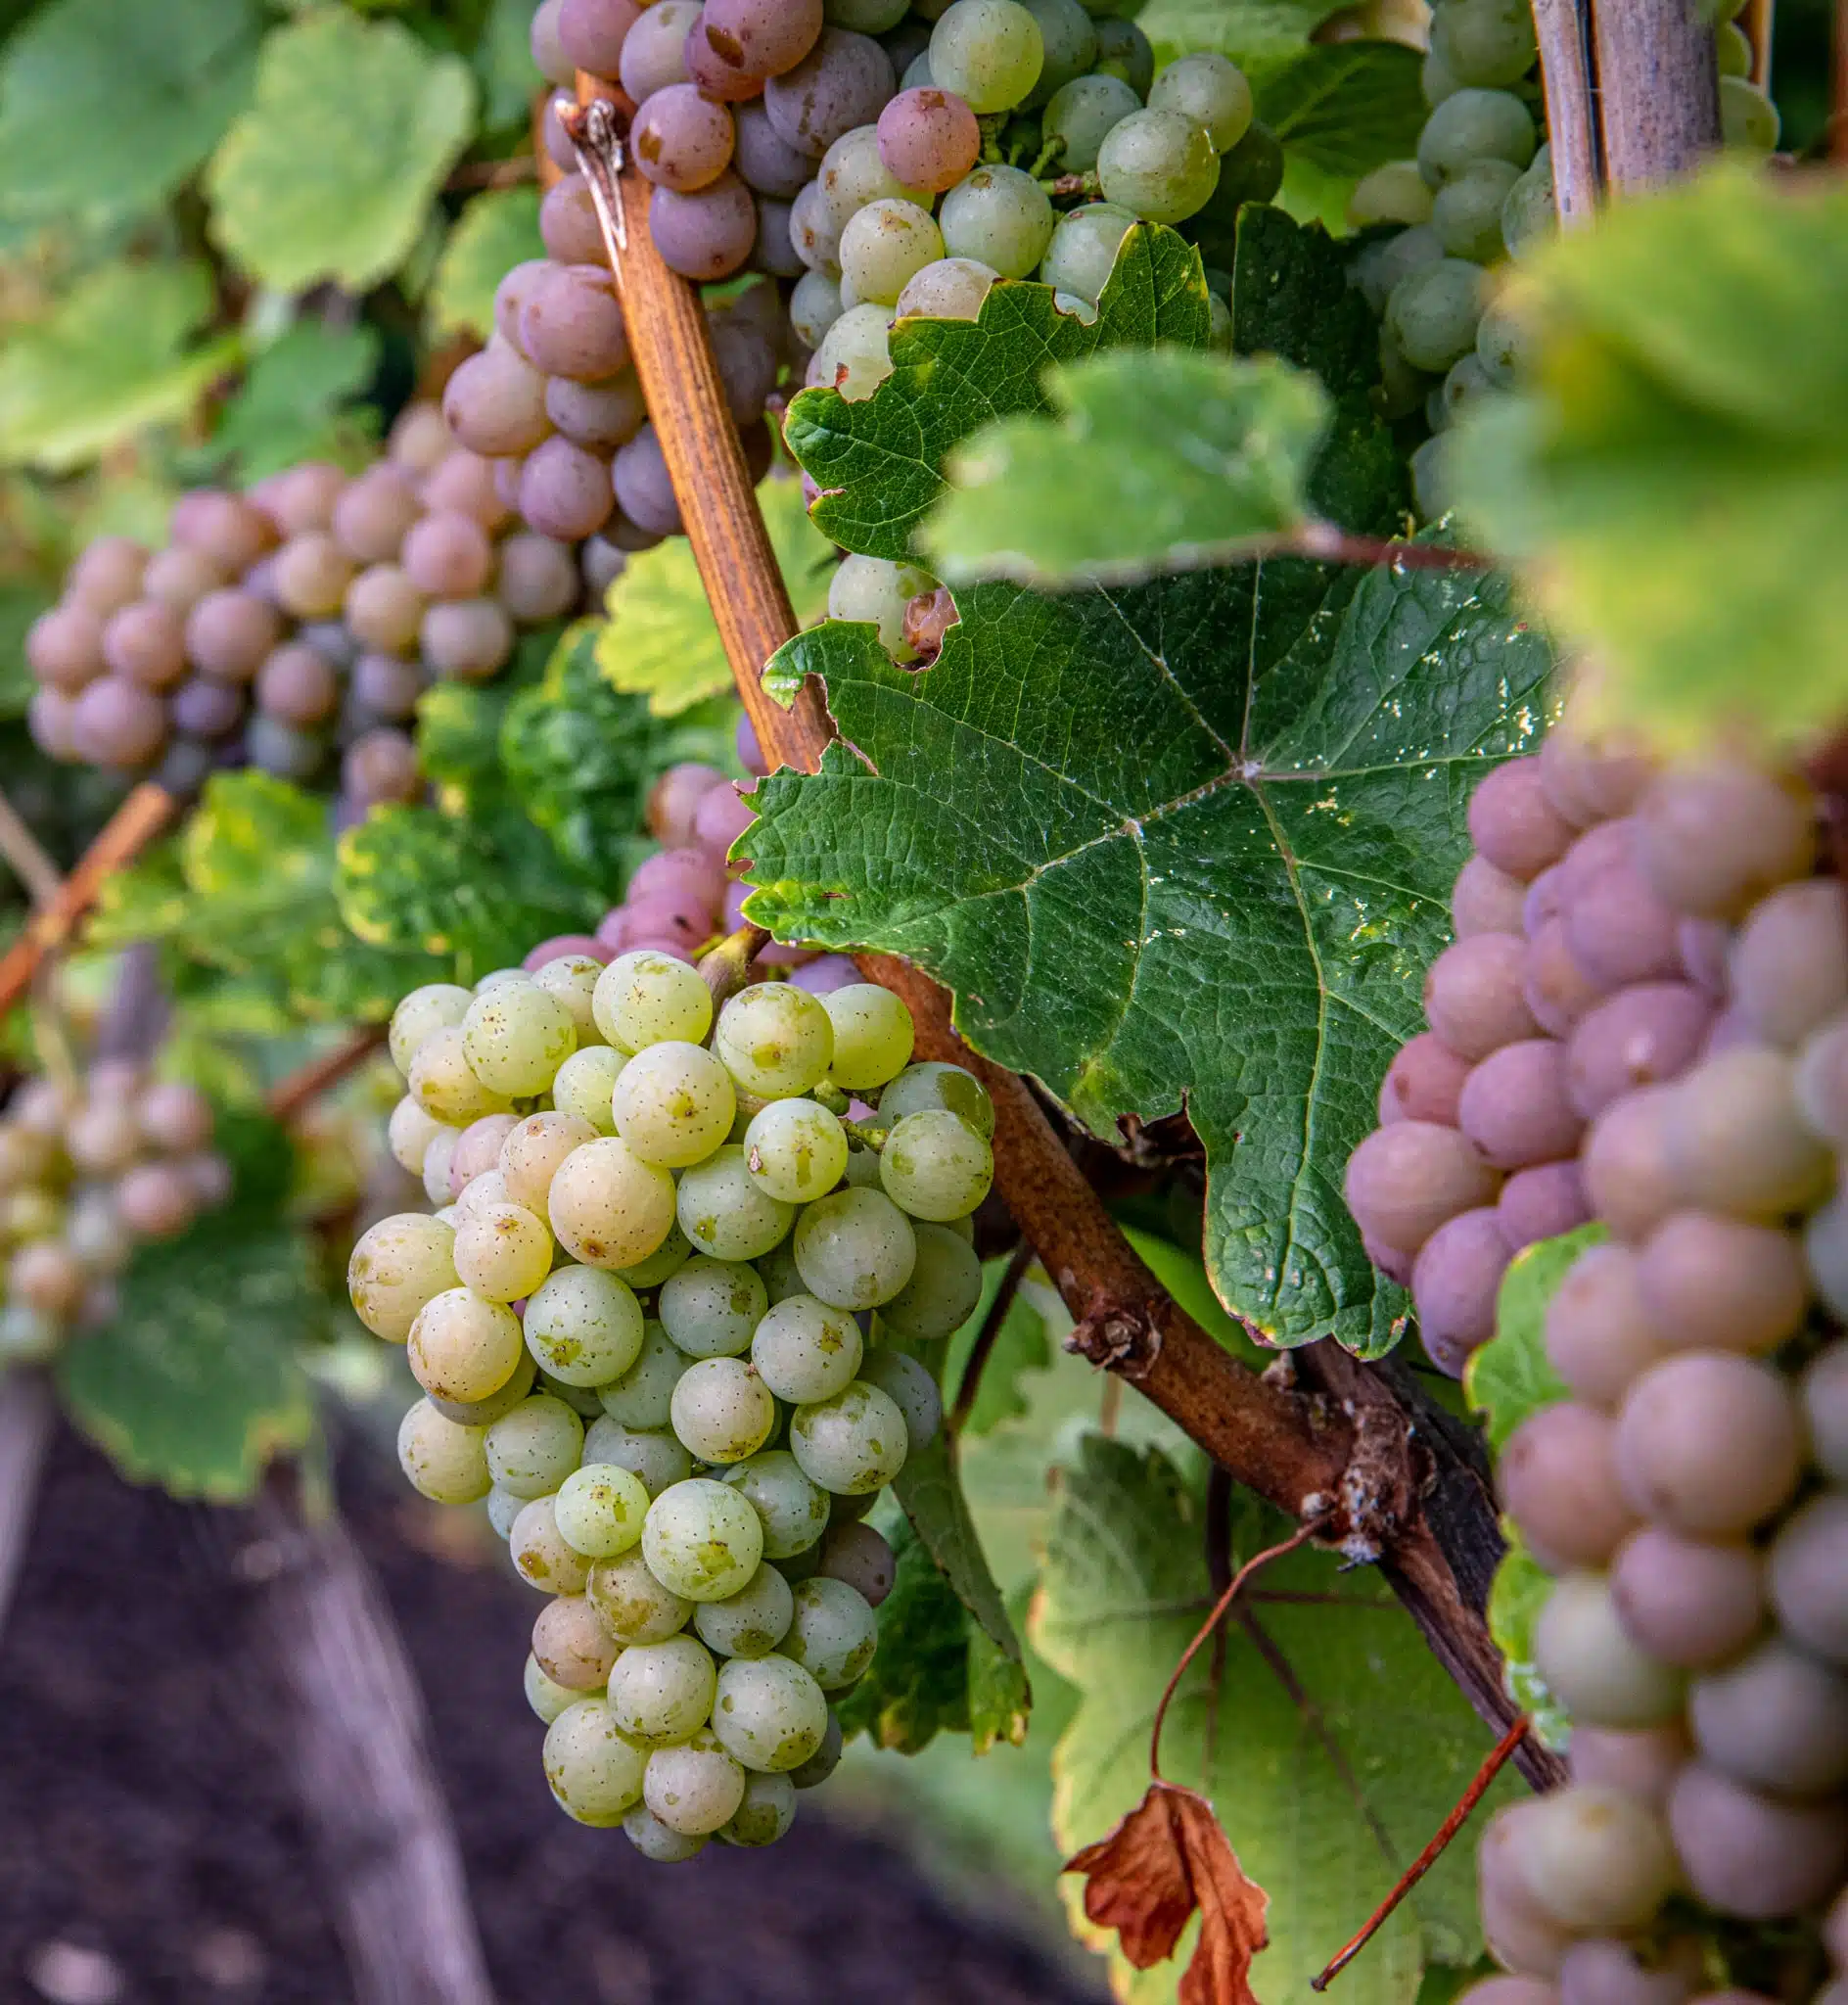 Grapes on the vine, Kelowna winery tours